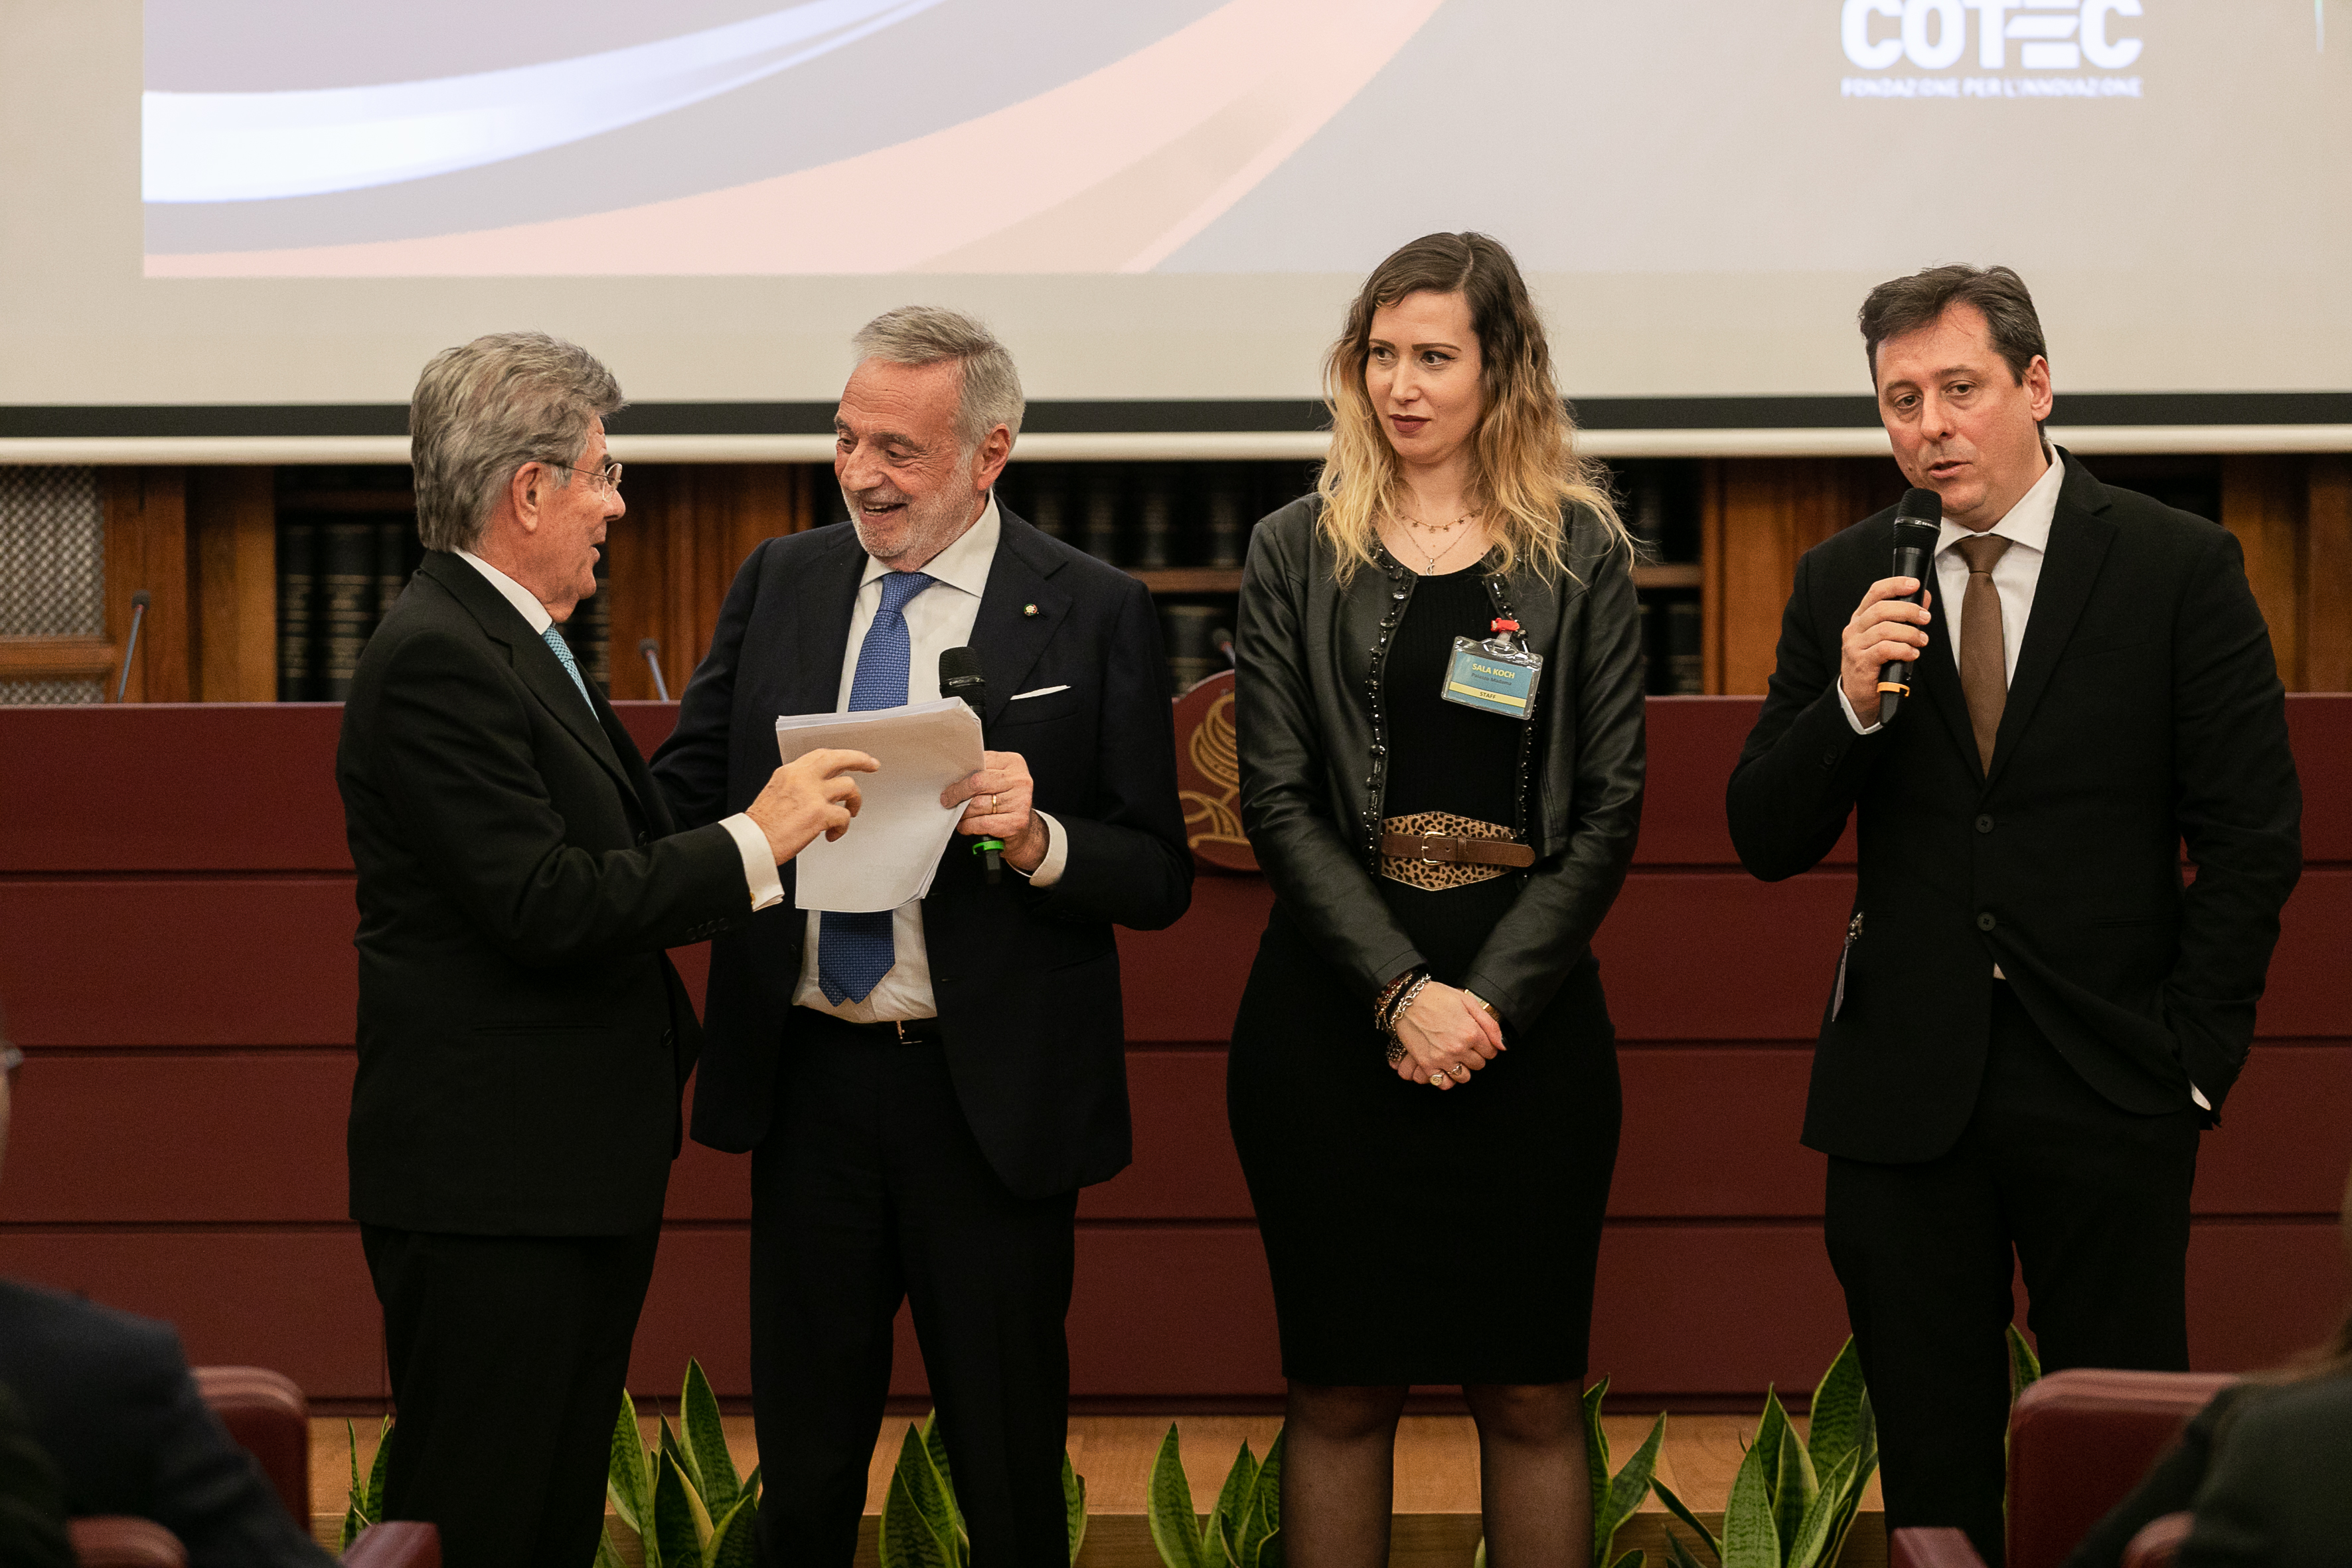 iGuzzini is awarded the 2018 “Premio dei Premi” prize for innovation